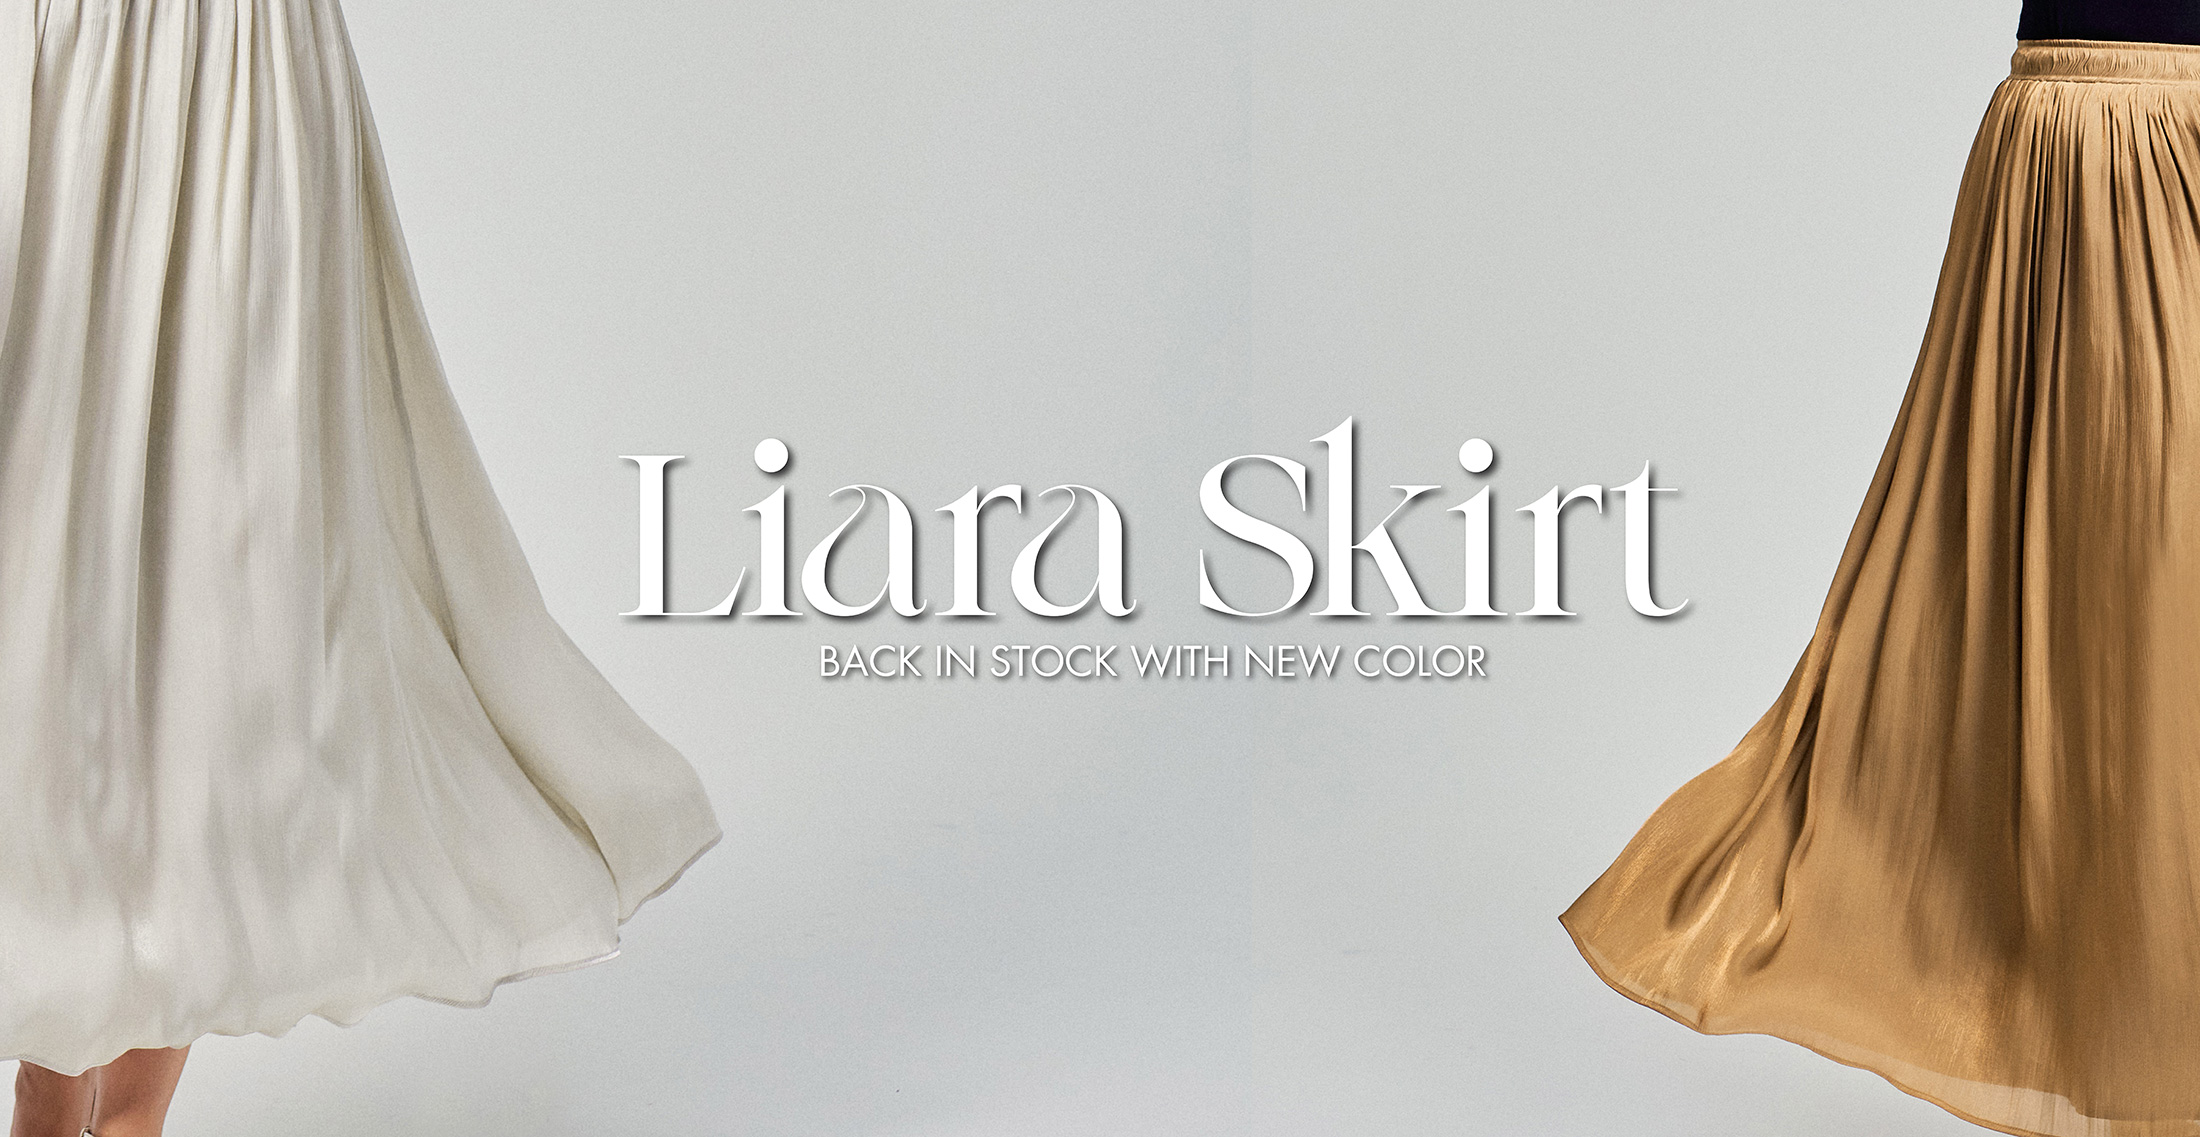 Liara Skirt